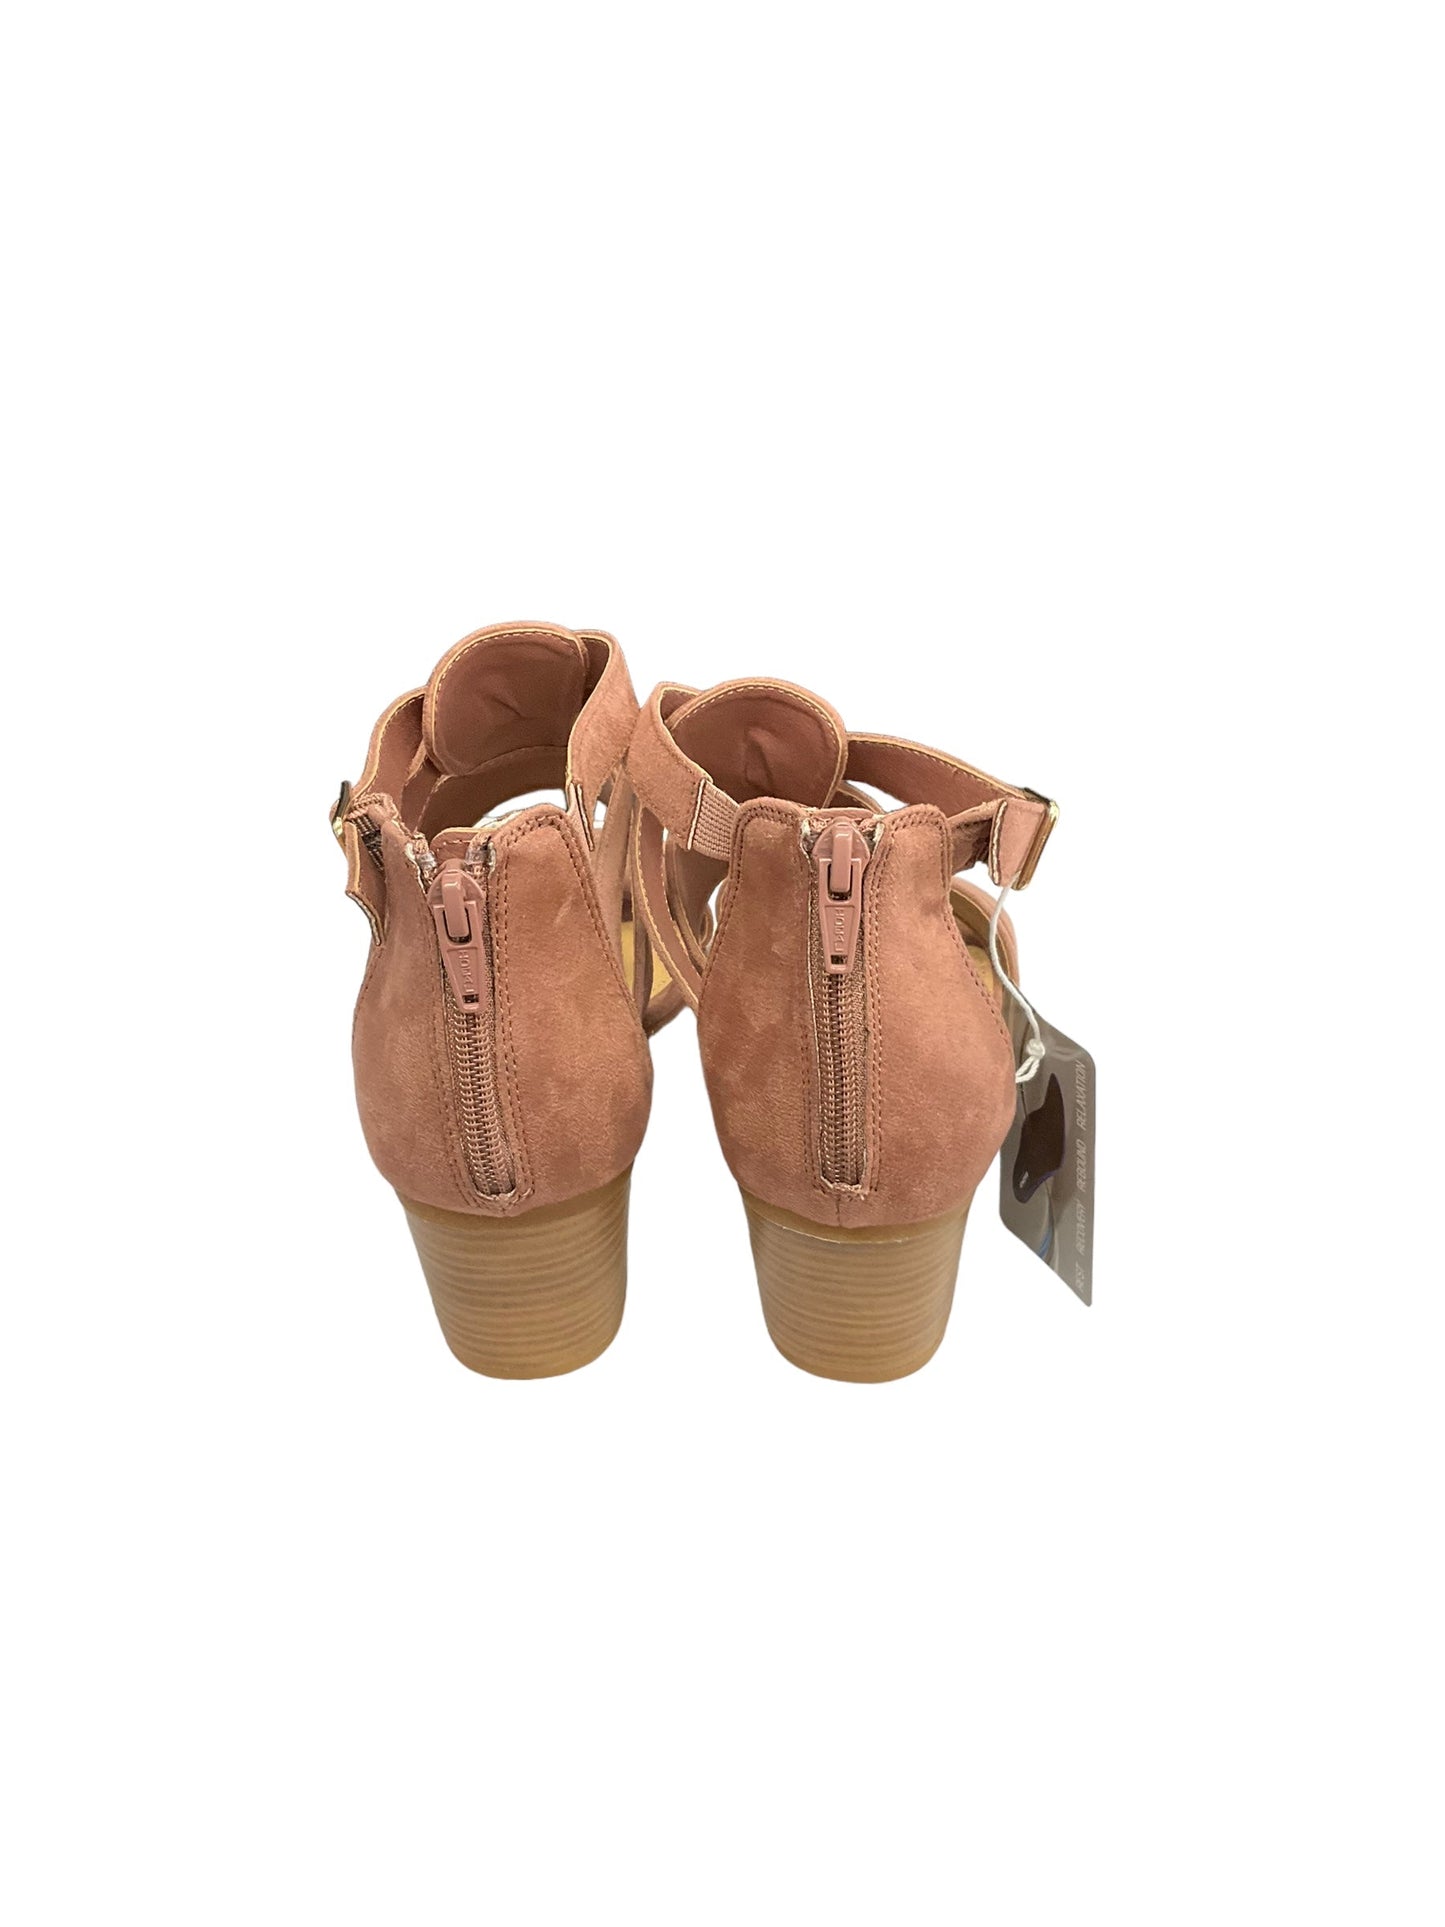 Tan Shoes Heels Block Sonoma, Size 9.5